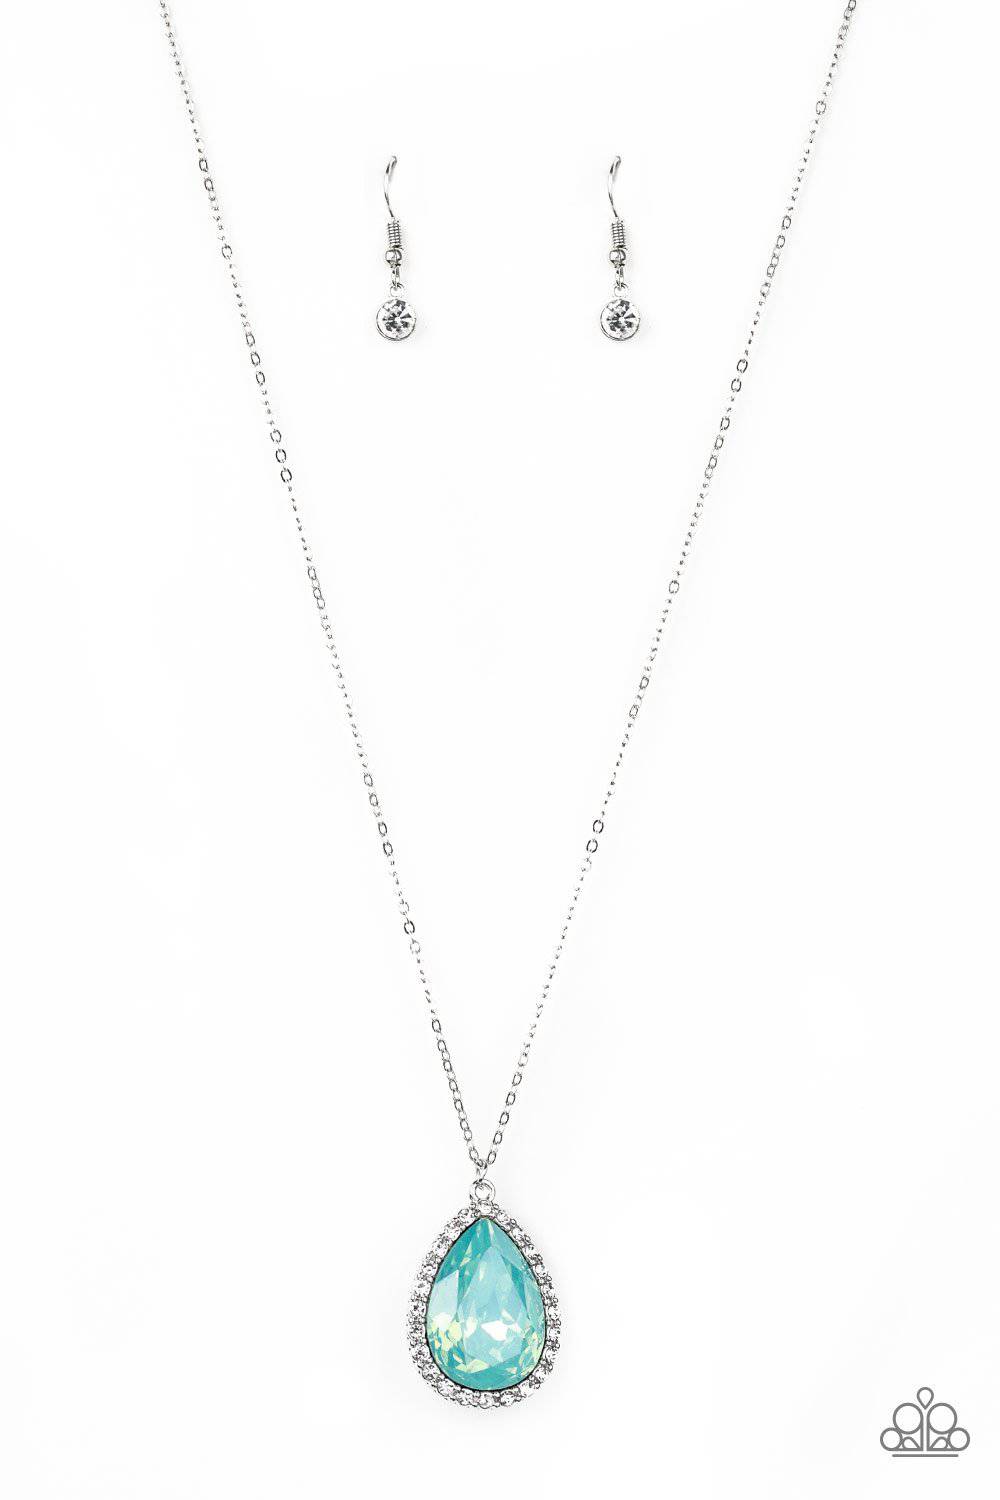 Come Of AGELESS - Green Rhinestone Necklace - Paparazzi Accessories - GlaMarous Titi Jewels